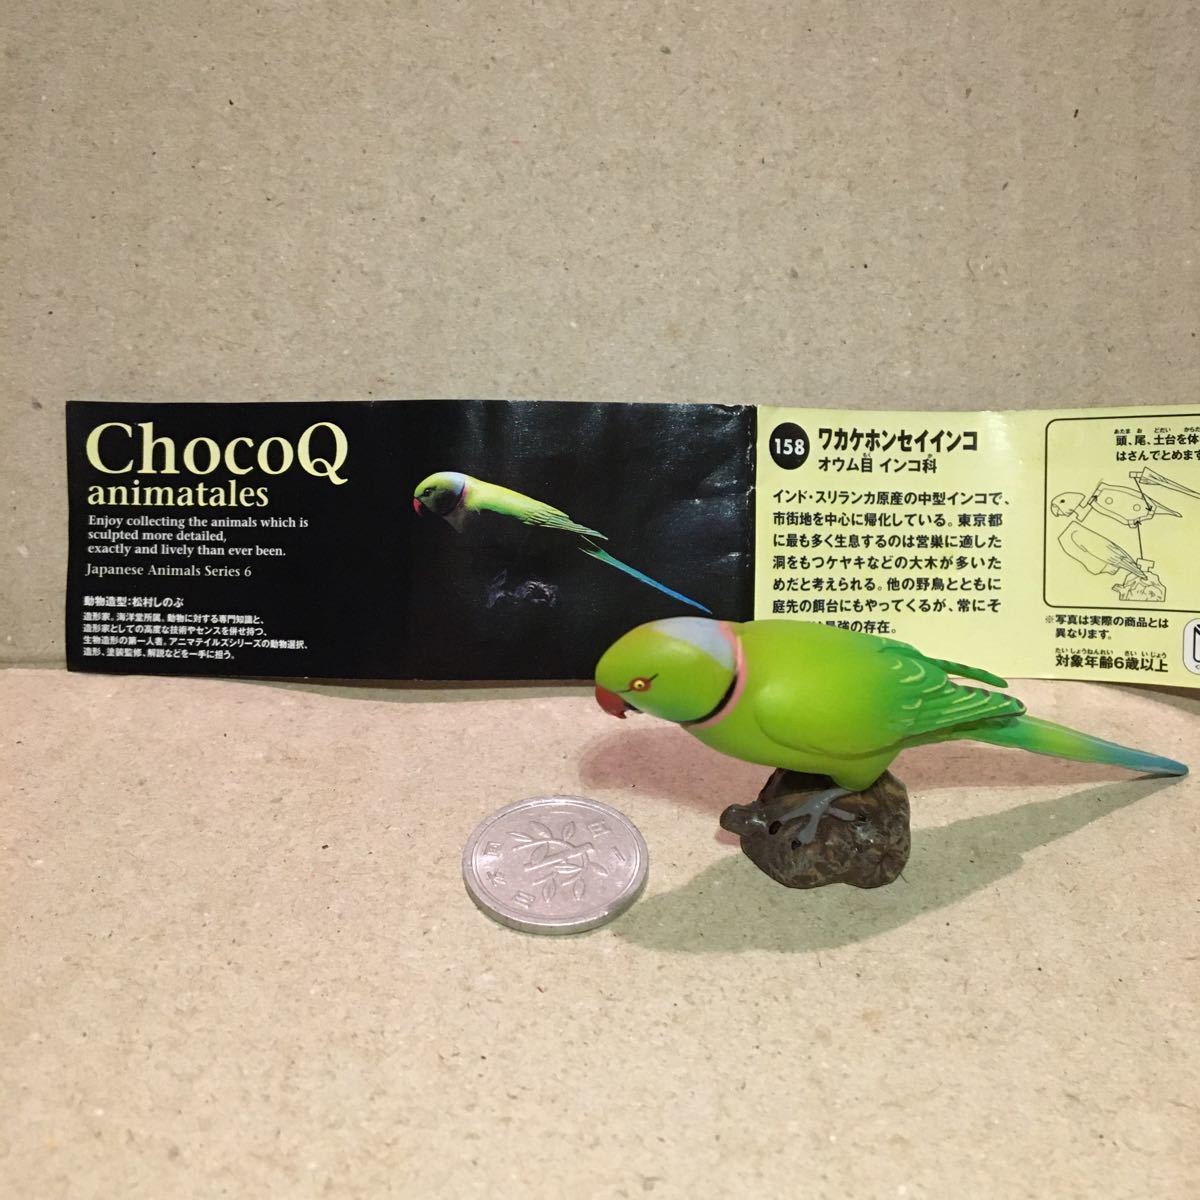 Chocoq No 158 ワカケホンセイインコ 日本の動物コレクション 売買されたオークション情報 Yahooの商品情報をアーカイブ公開 オークファン Aucfan Com